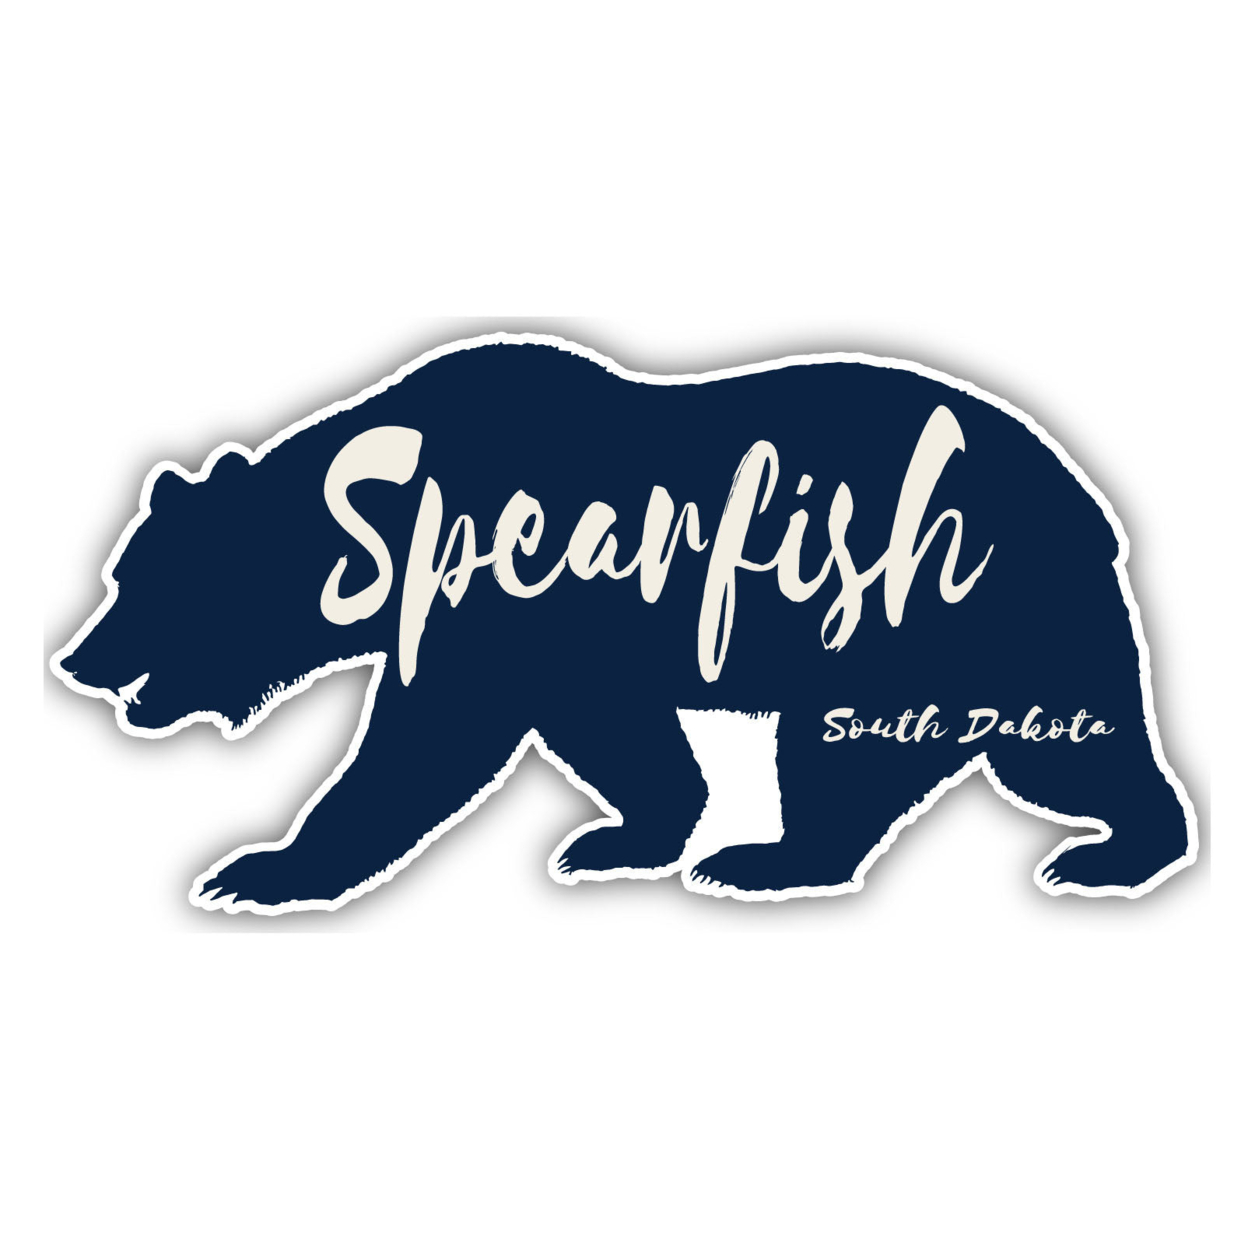 Spearfish South Dakota Souvenir Decorative Stickers (Choose Theme And Size) - Single Unit, 2-Inch, Adventures Awaits